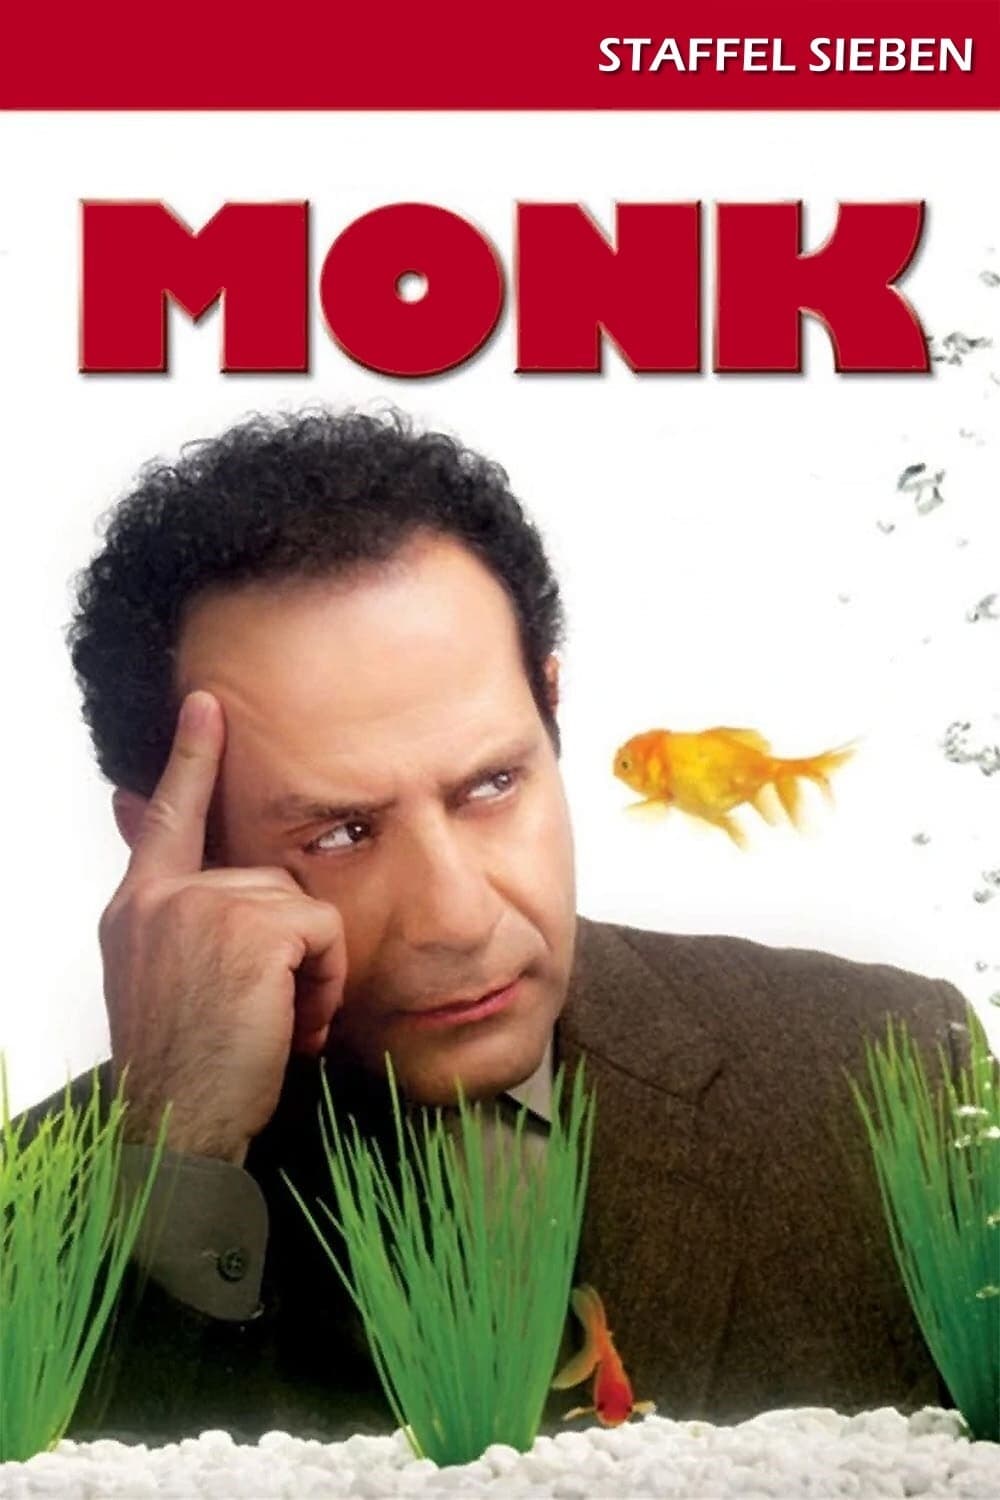 Monk Season 7